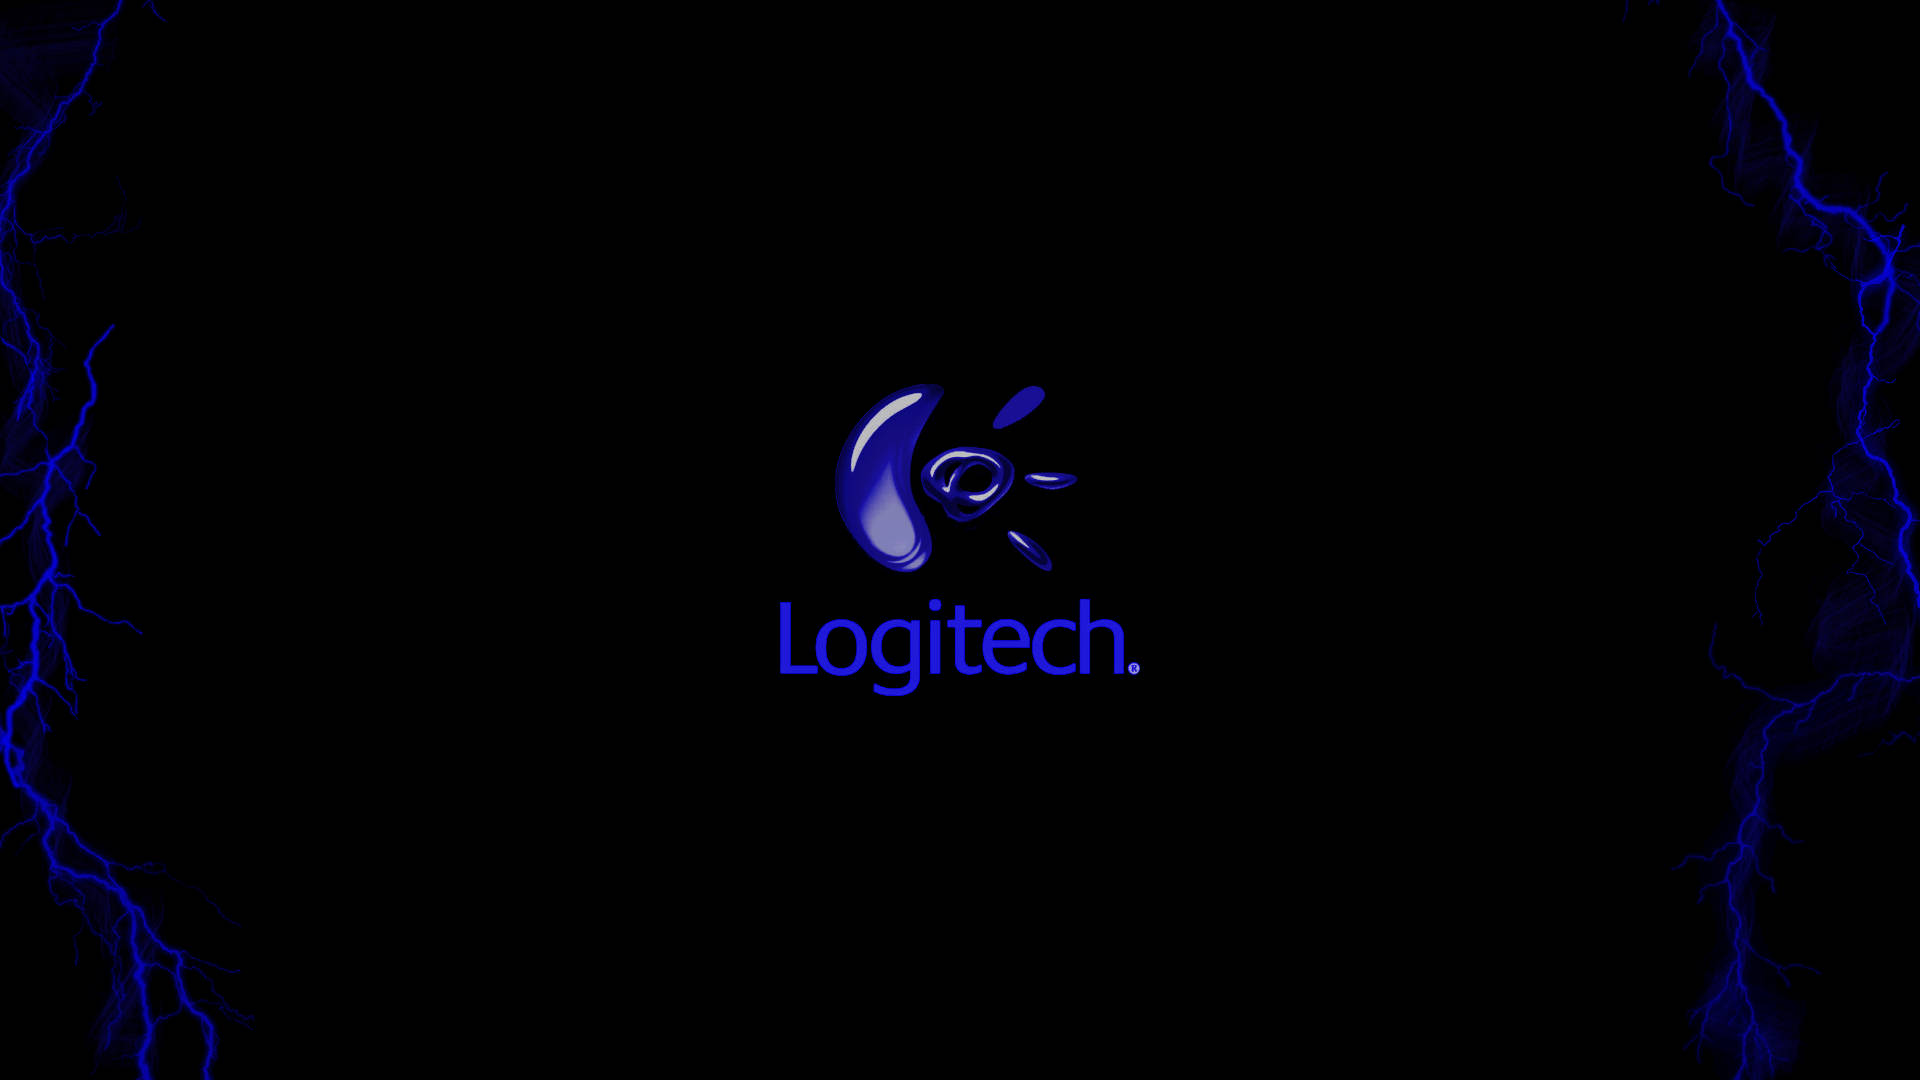 Violetteslogitech-logo Wallpaper